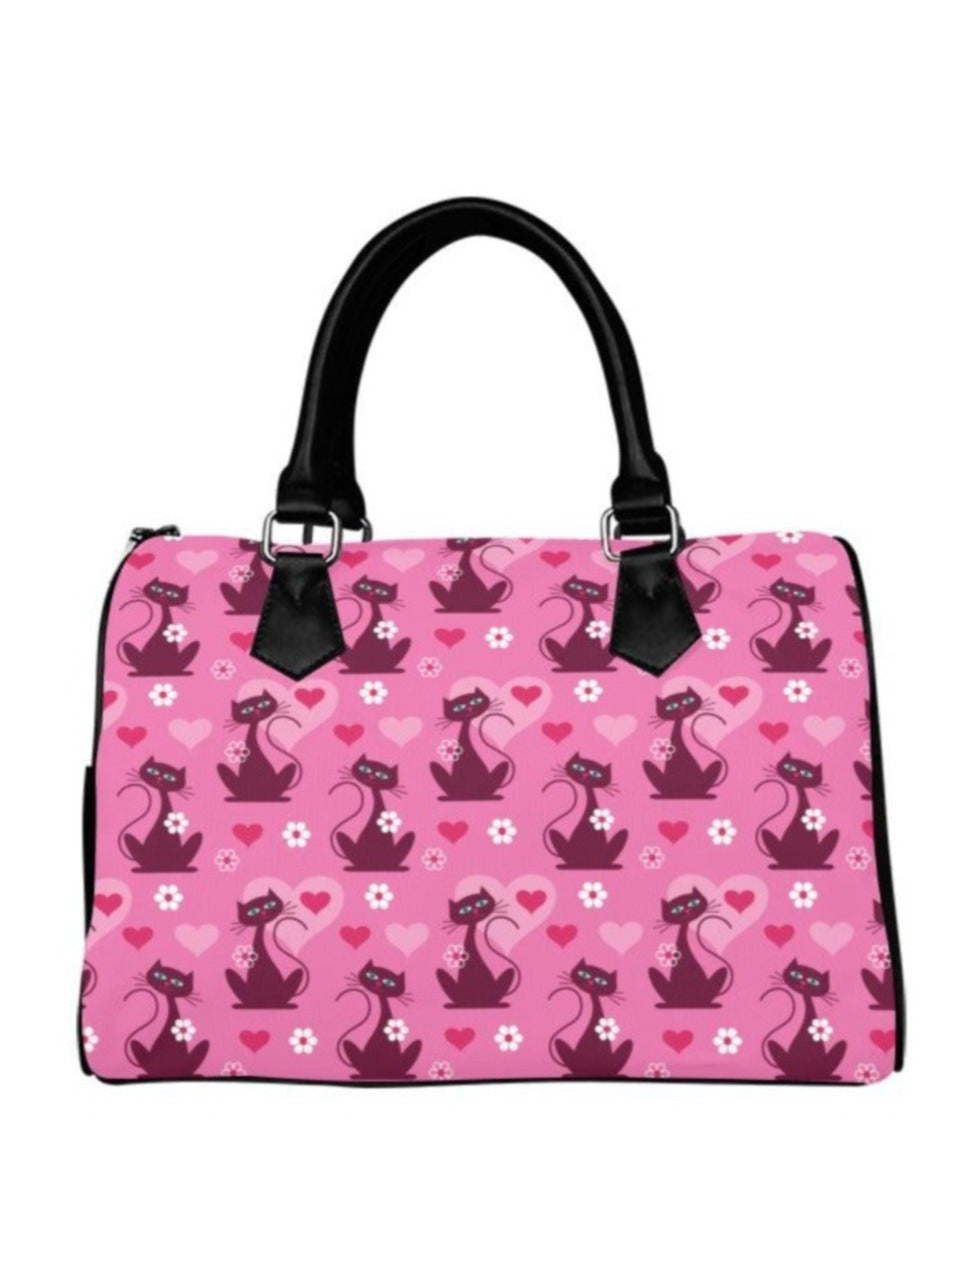 RETRO LOVE CATS Barrel Type Handbag